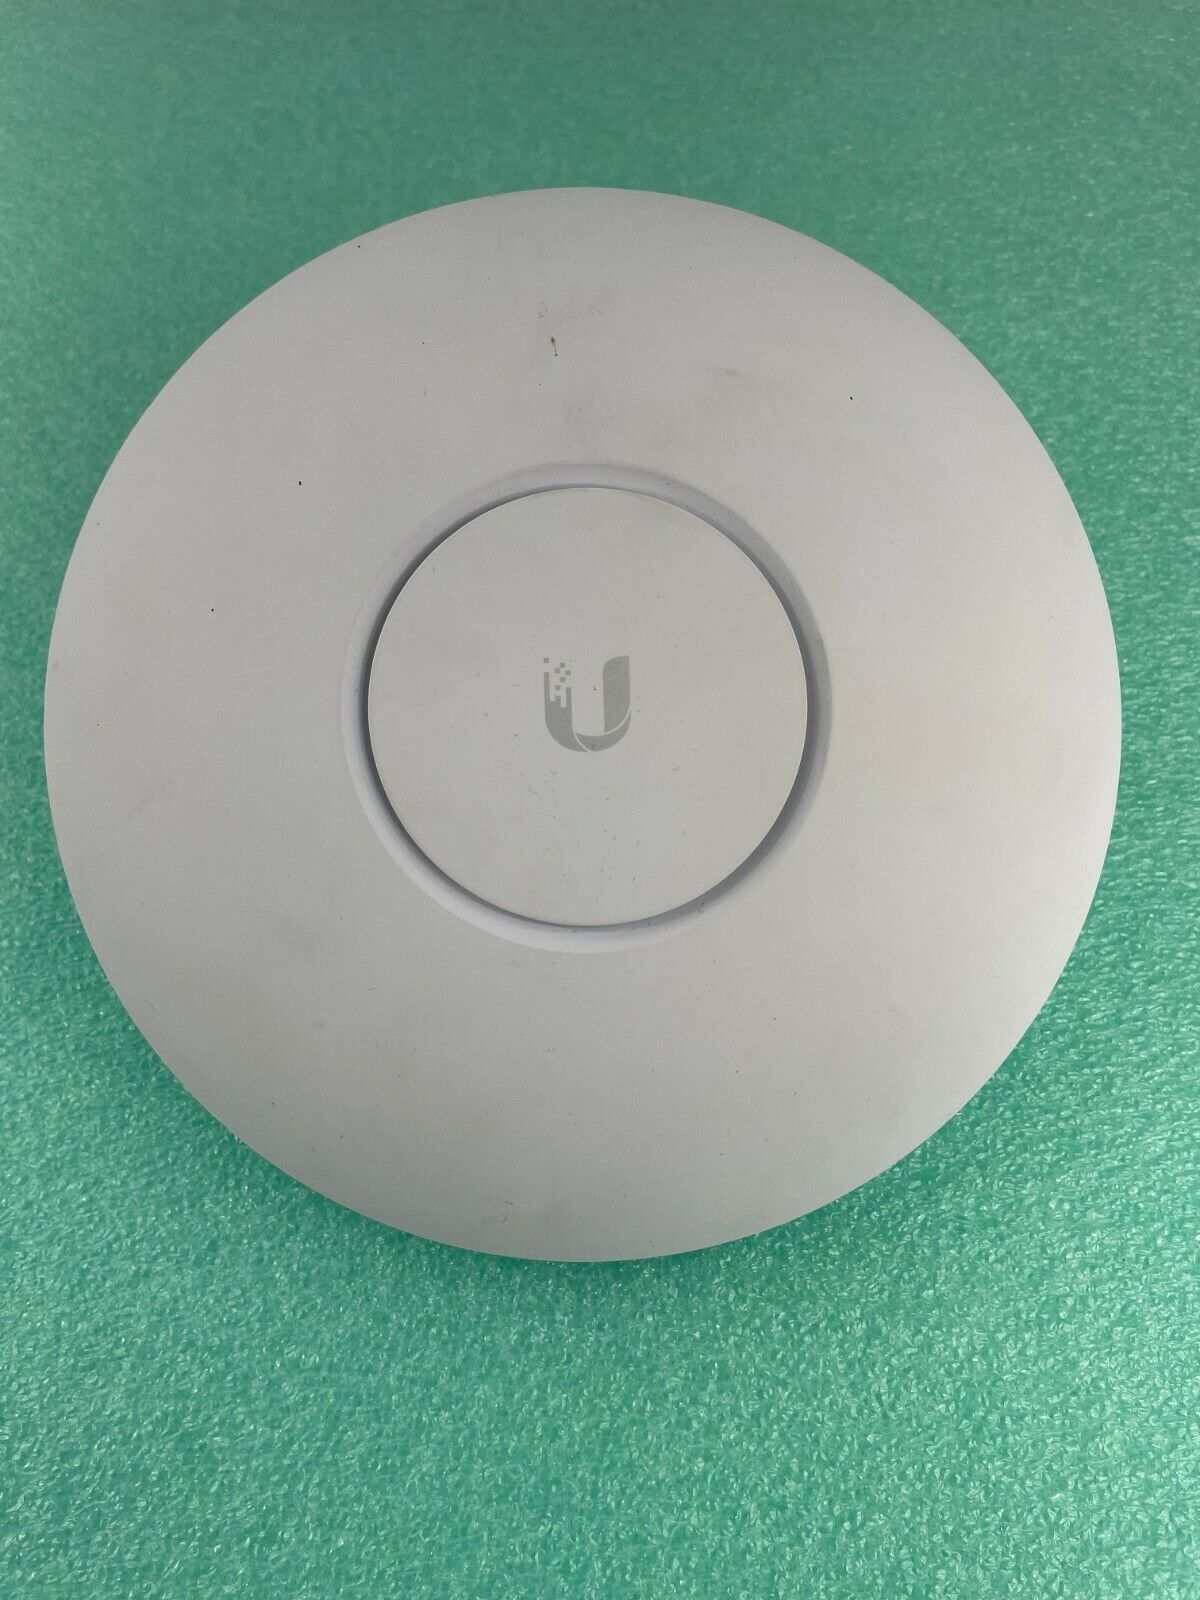 Ubiquiti Unifi AP AC PRO UAP-AC-PRO-US 802.11ac PRO Wireless Access Point 